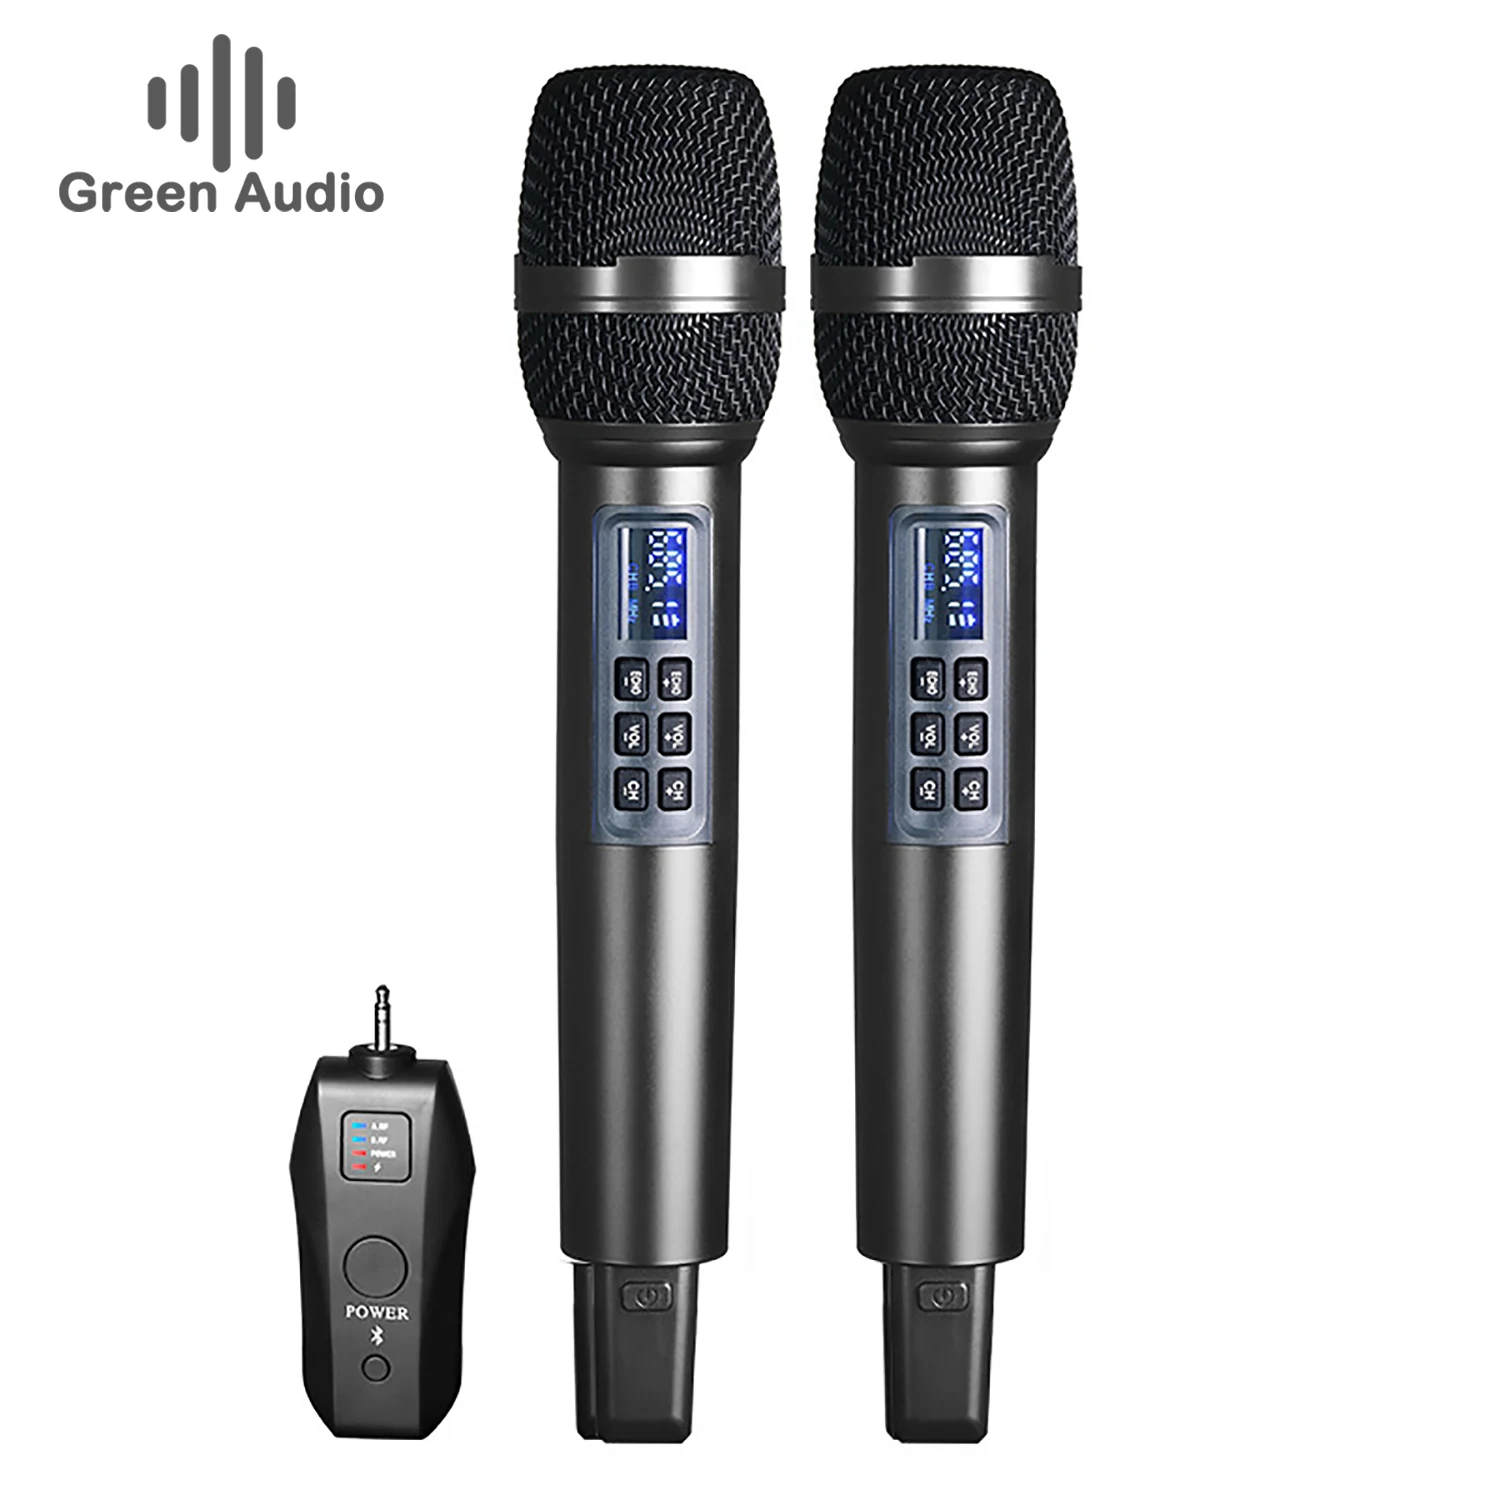 

GAW-N22 universal microphone with adjustable frequency Home Karaoke microphone